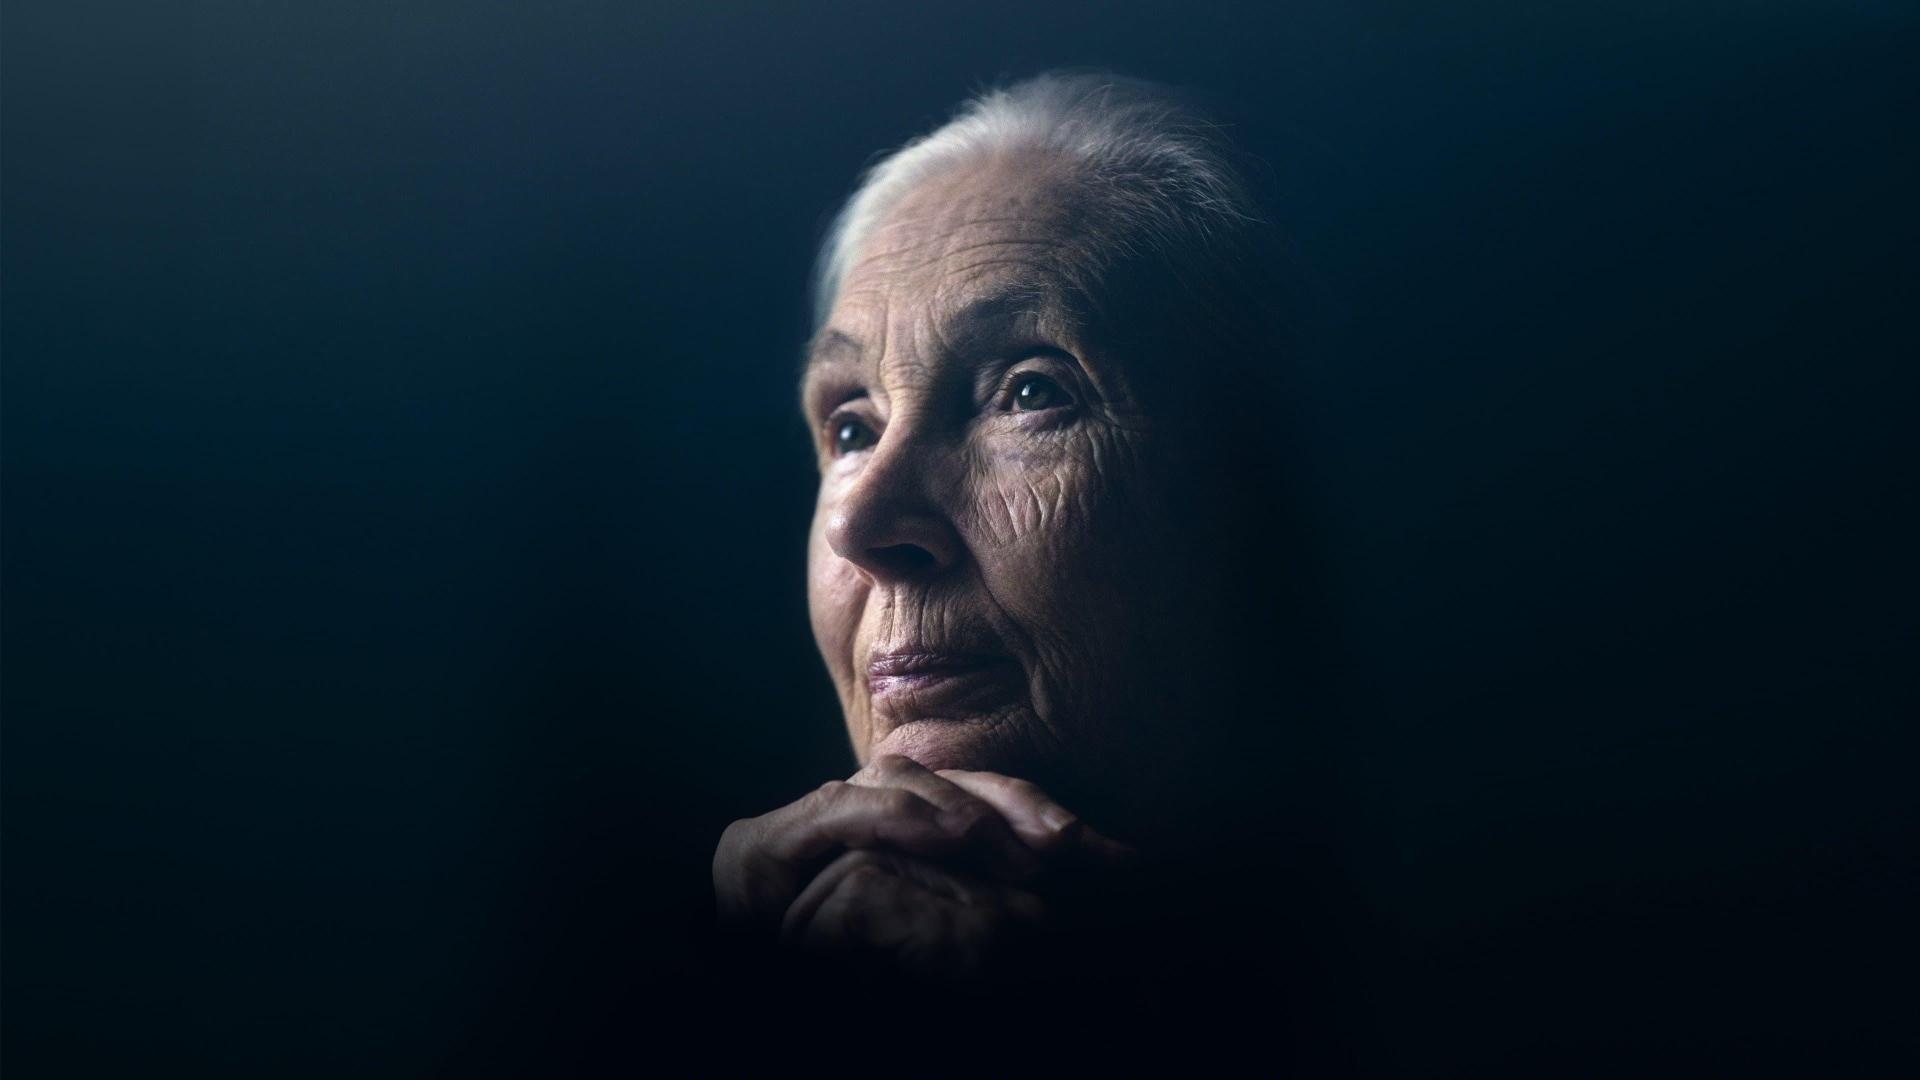 دانلود مستند Jane Goodall: The Hope 2020